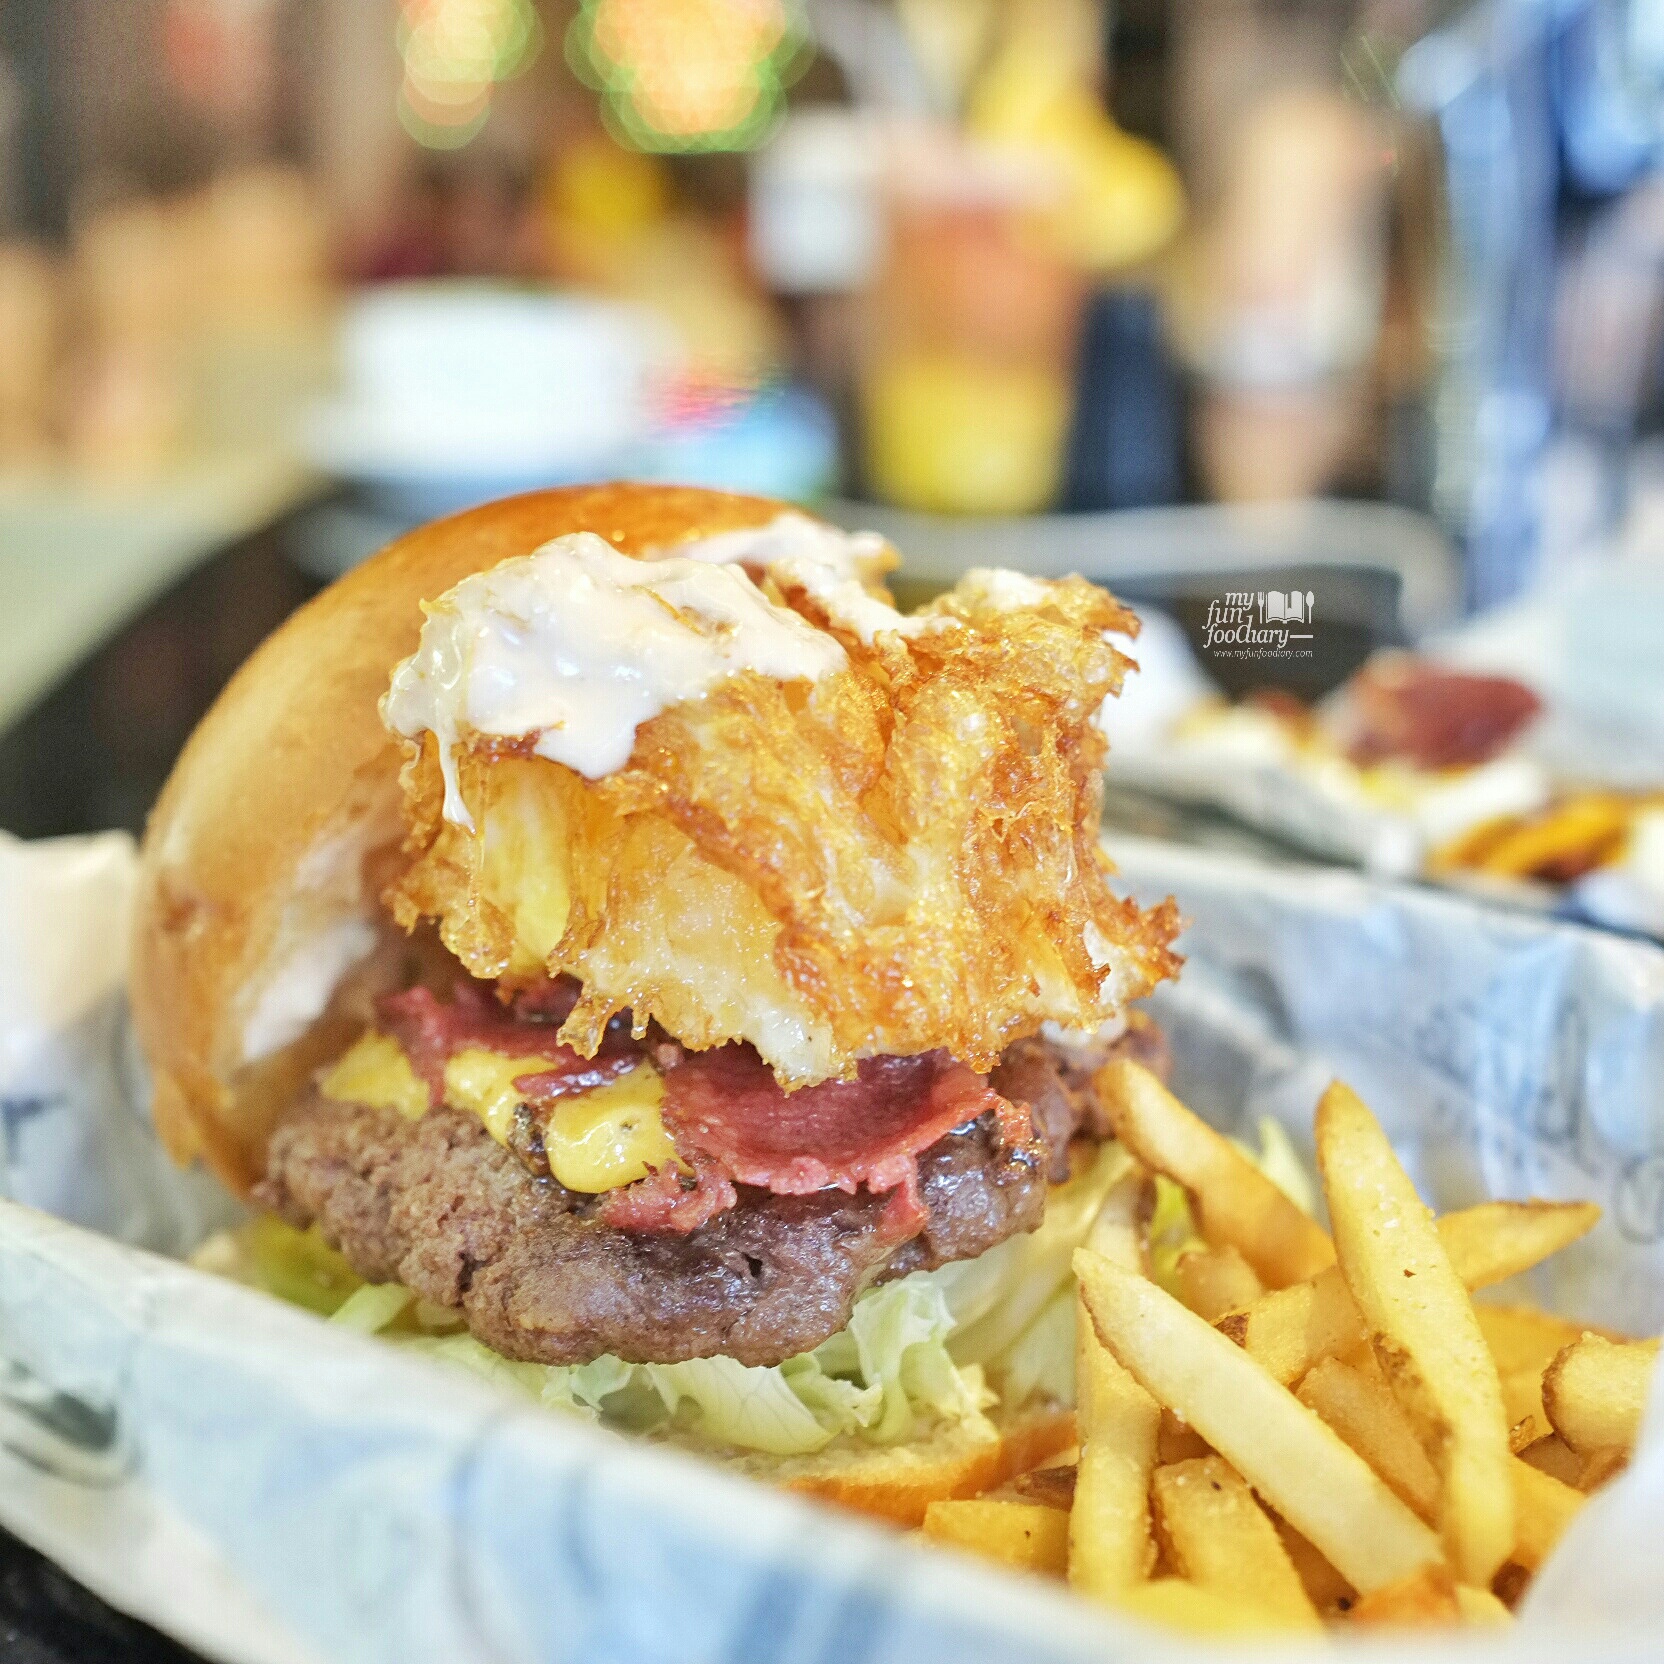 Heart Attack Burger at Bun n Bite Kelapa Gading by Myfunfoodiary 01